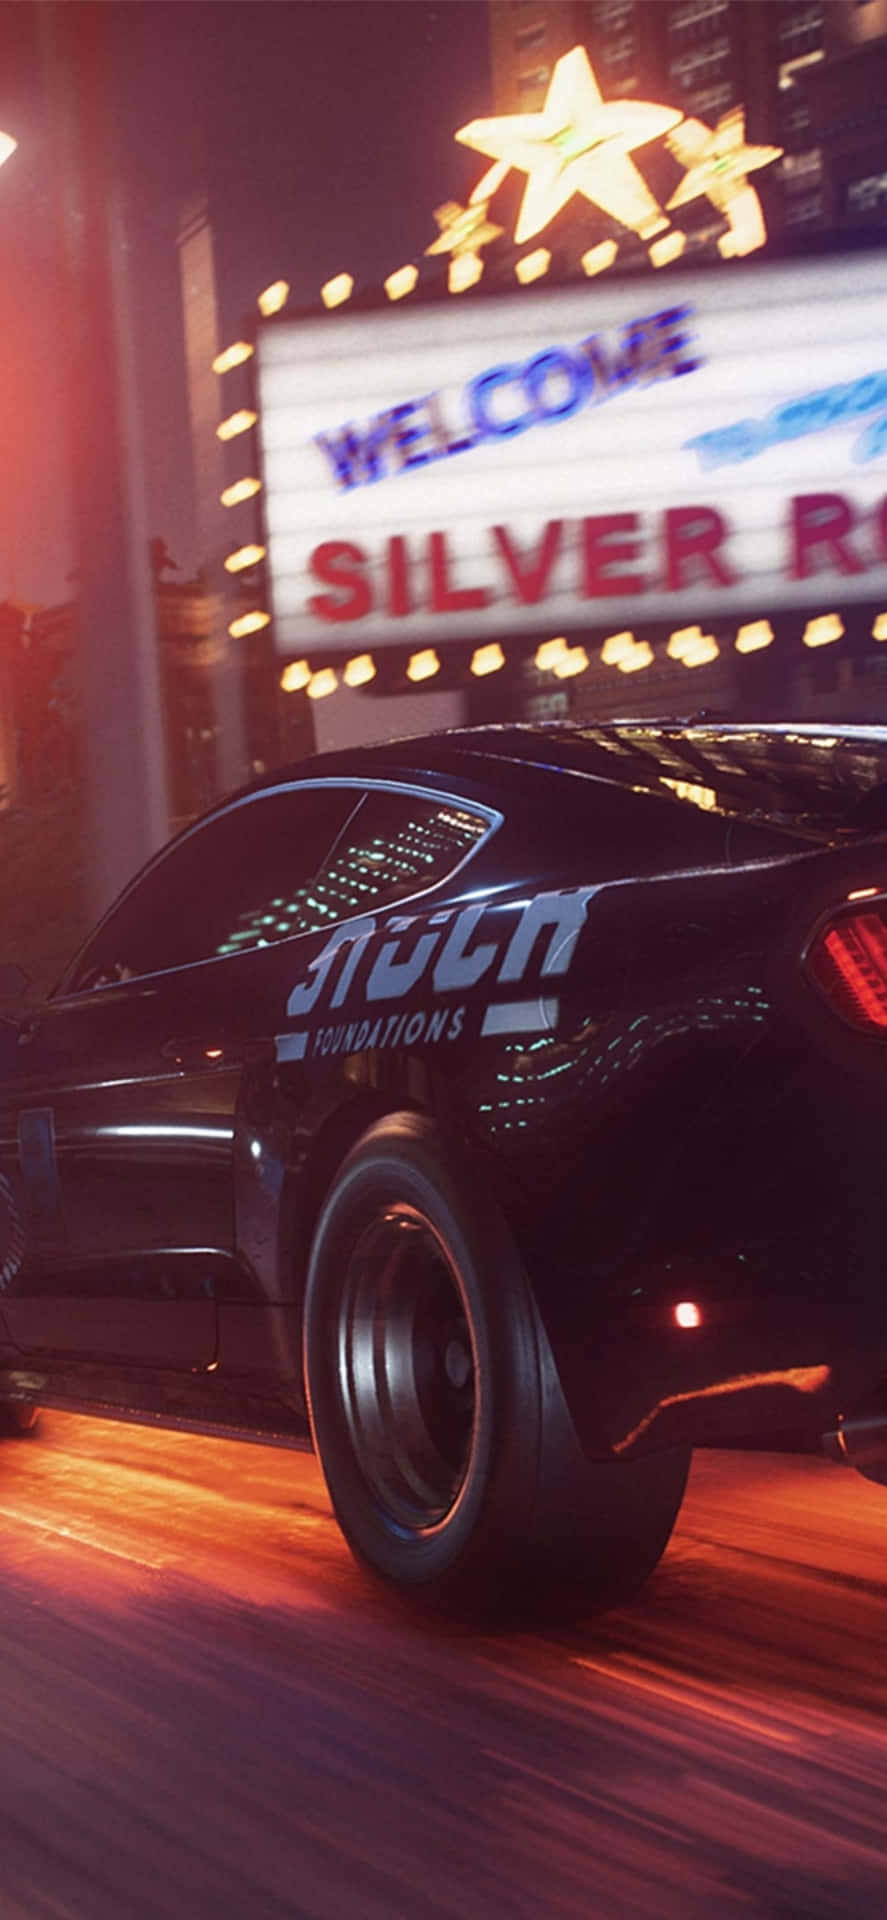 Iphonexs Bakgrundsbild Med Need For Speed Payback I En Svart Ford Mustang.